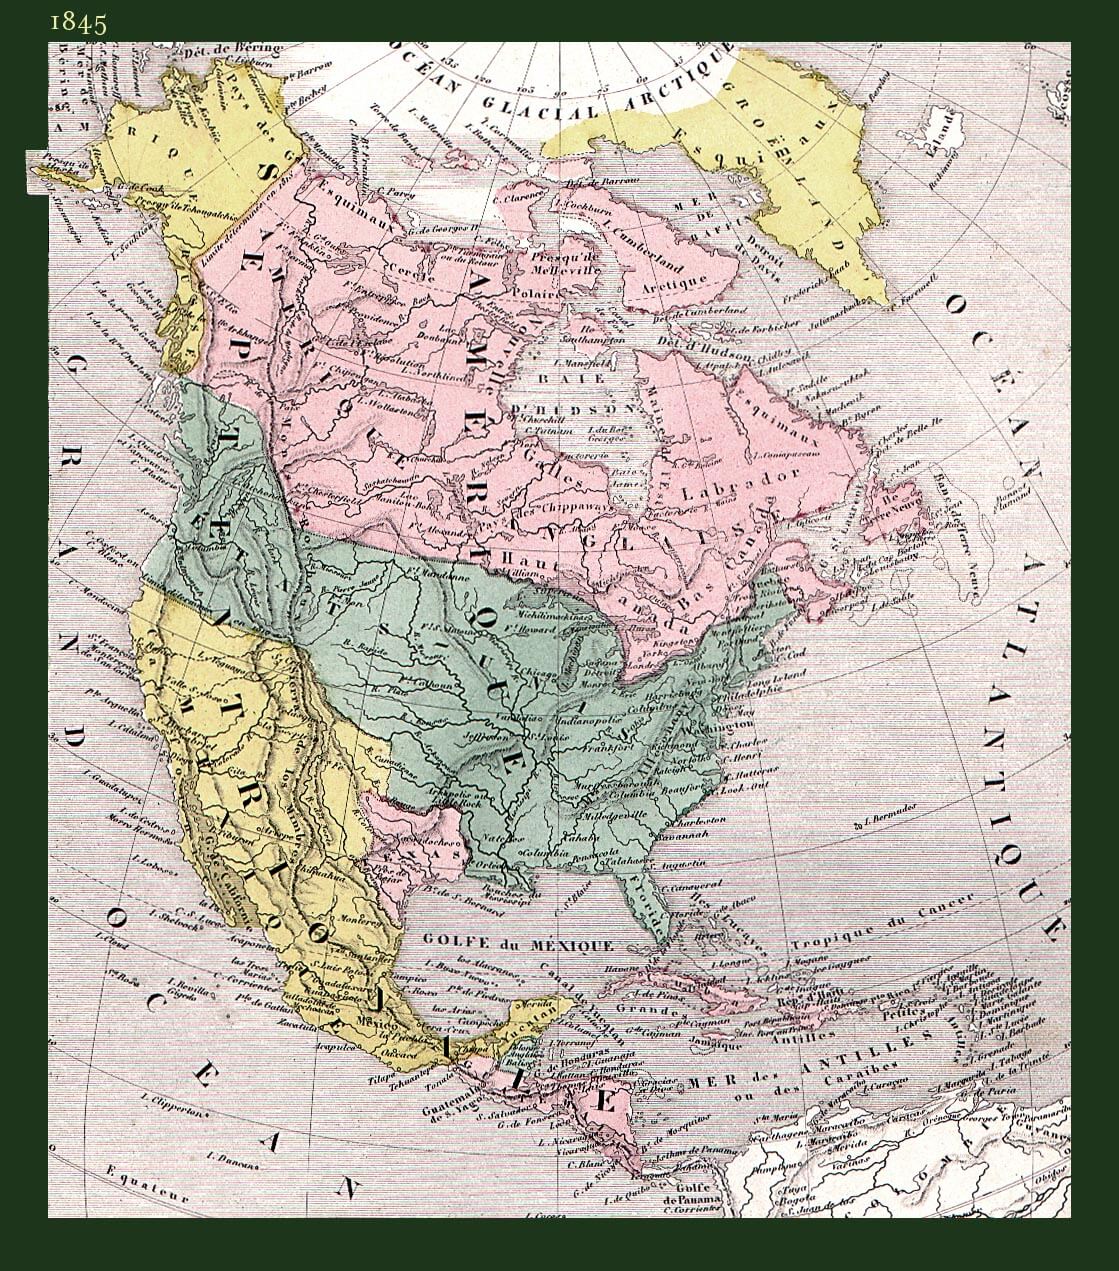 north america historical map 1845